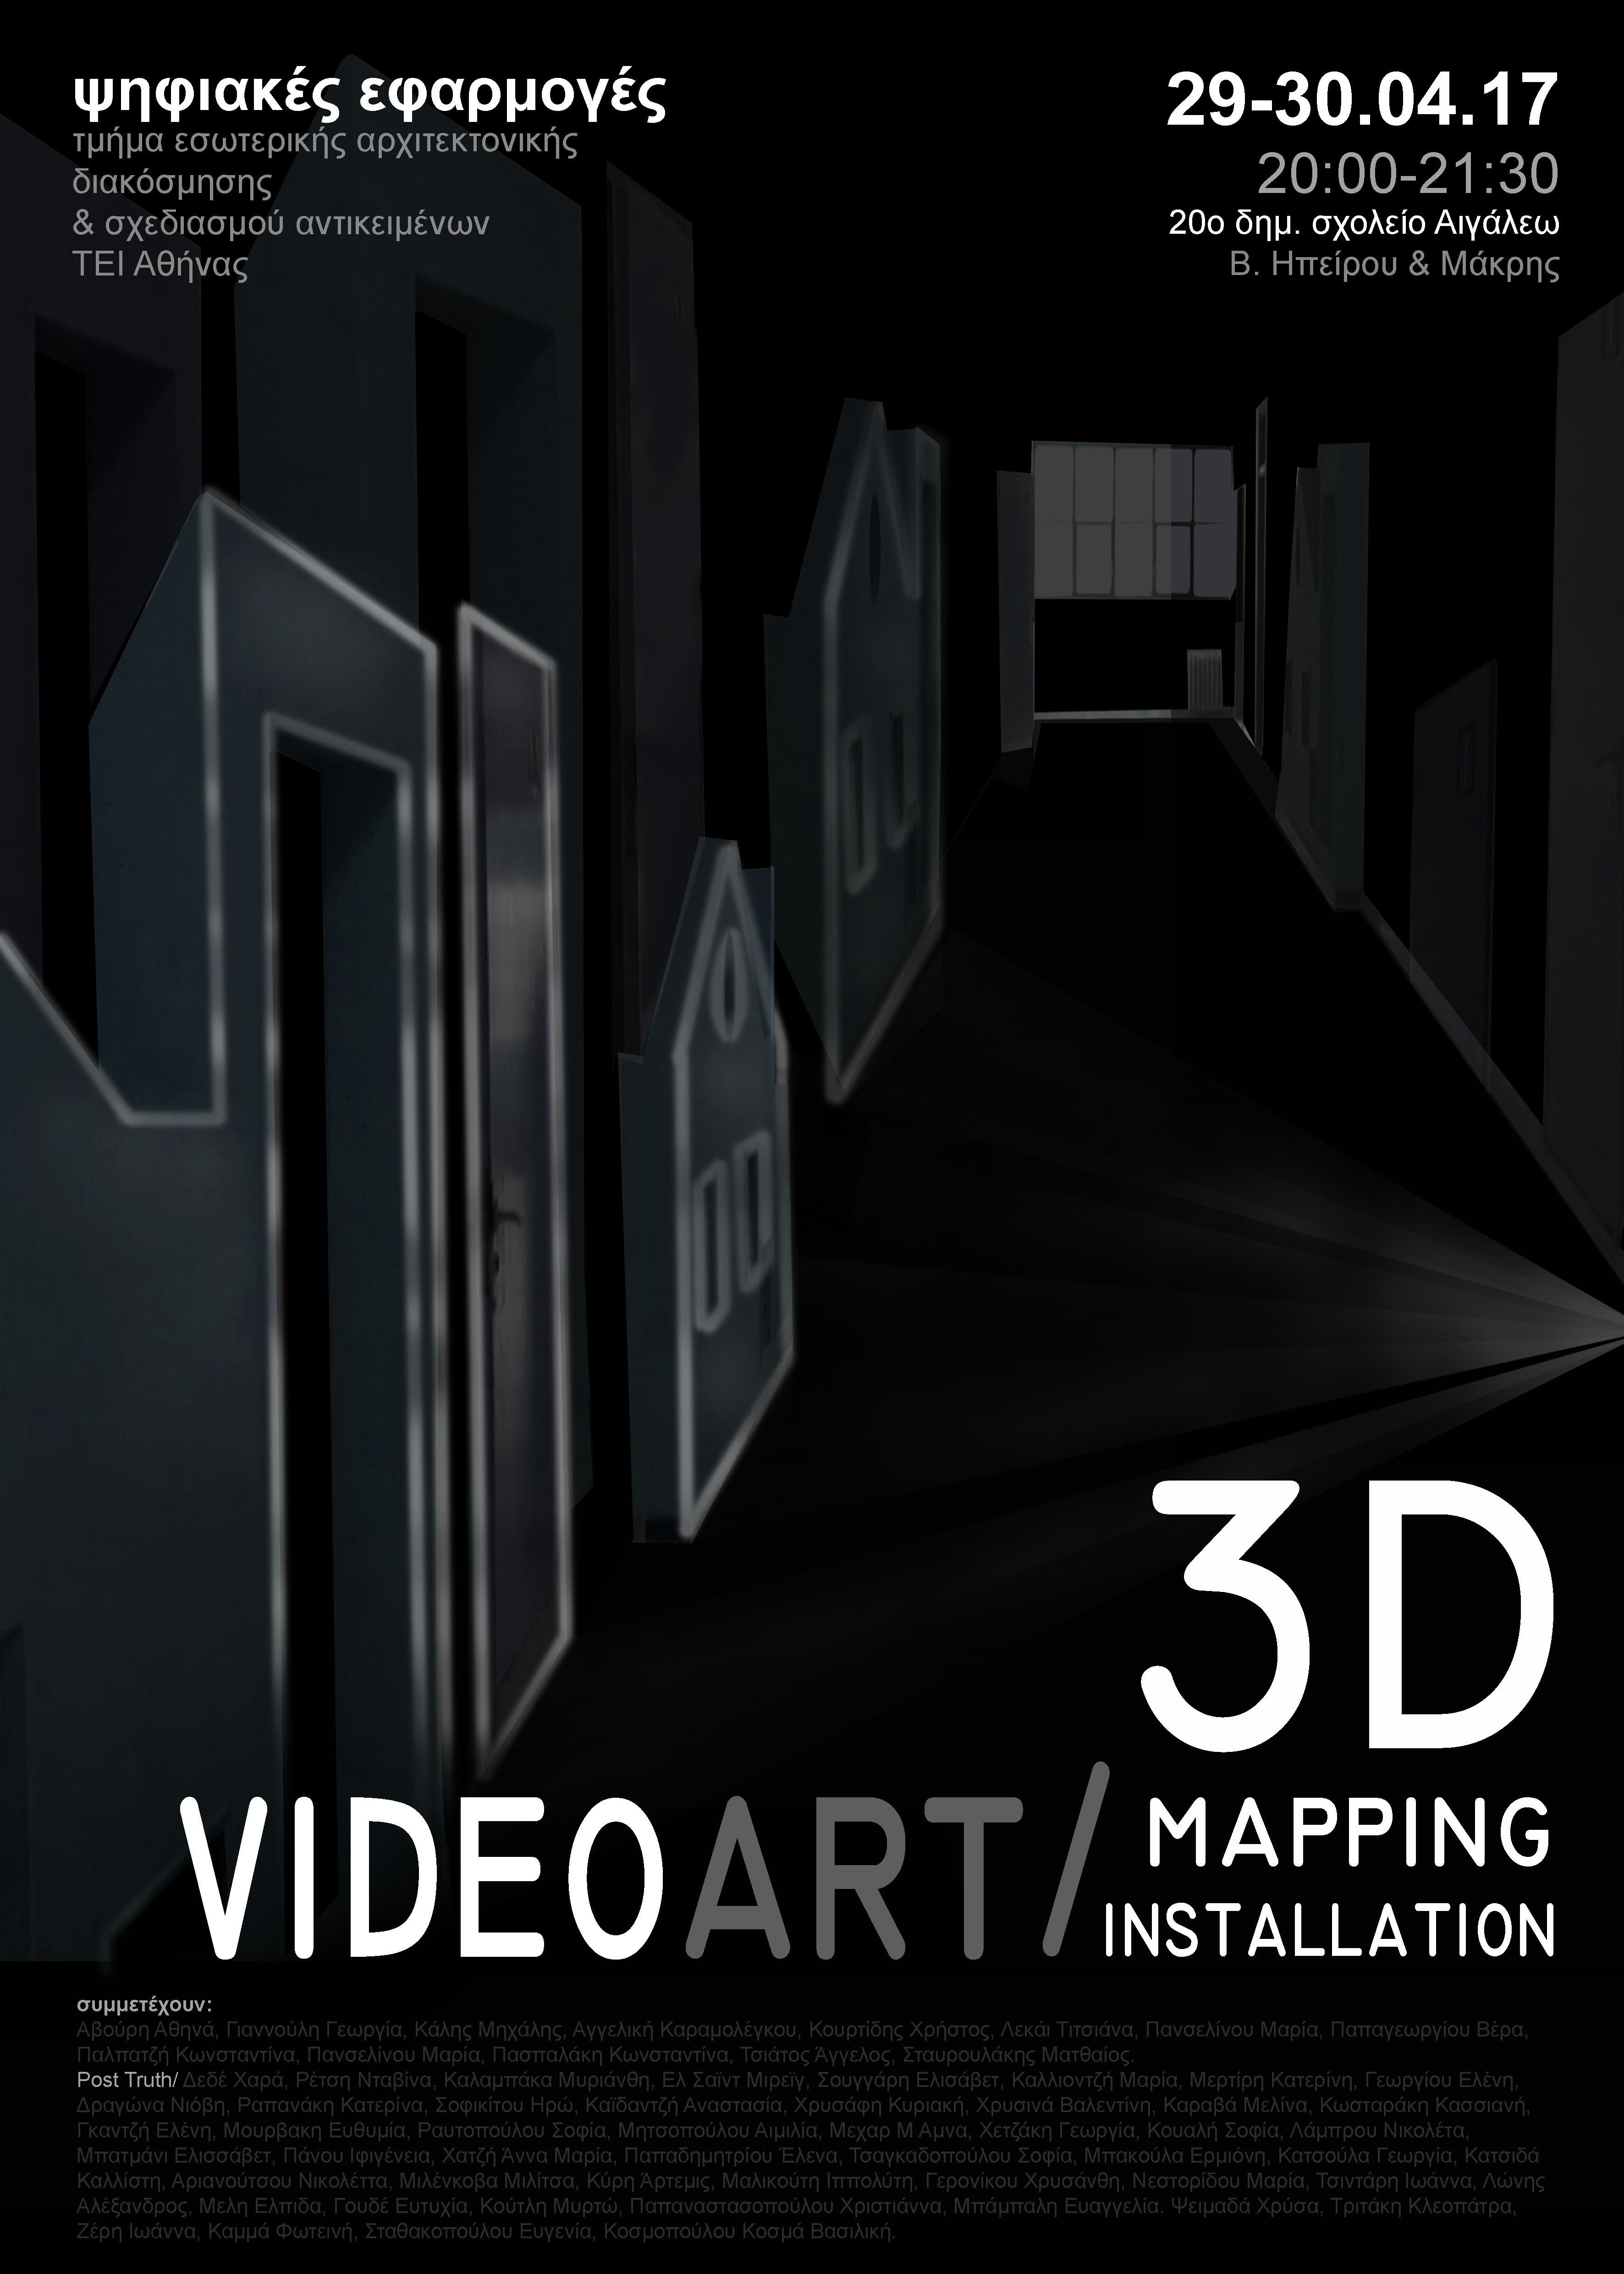 3D Video Art / Mapping Installation